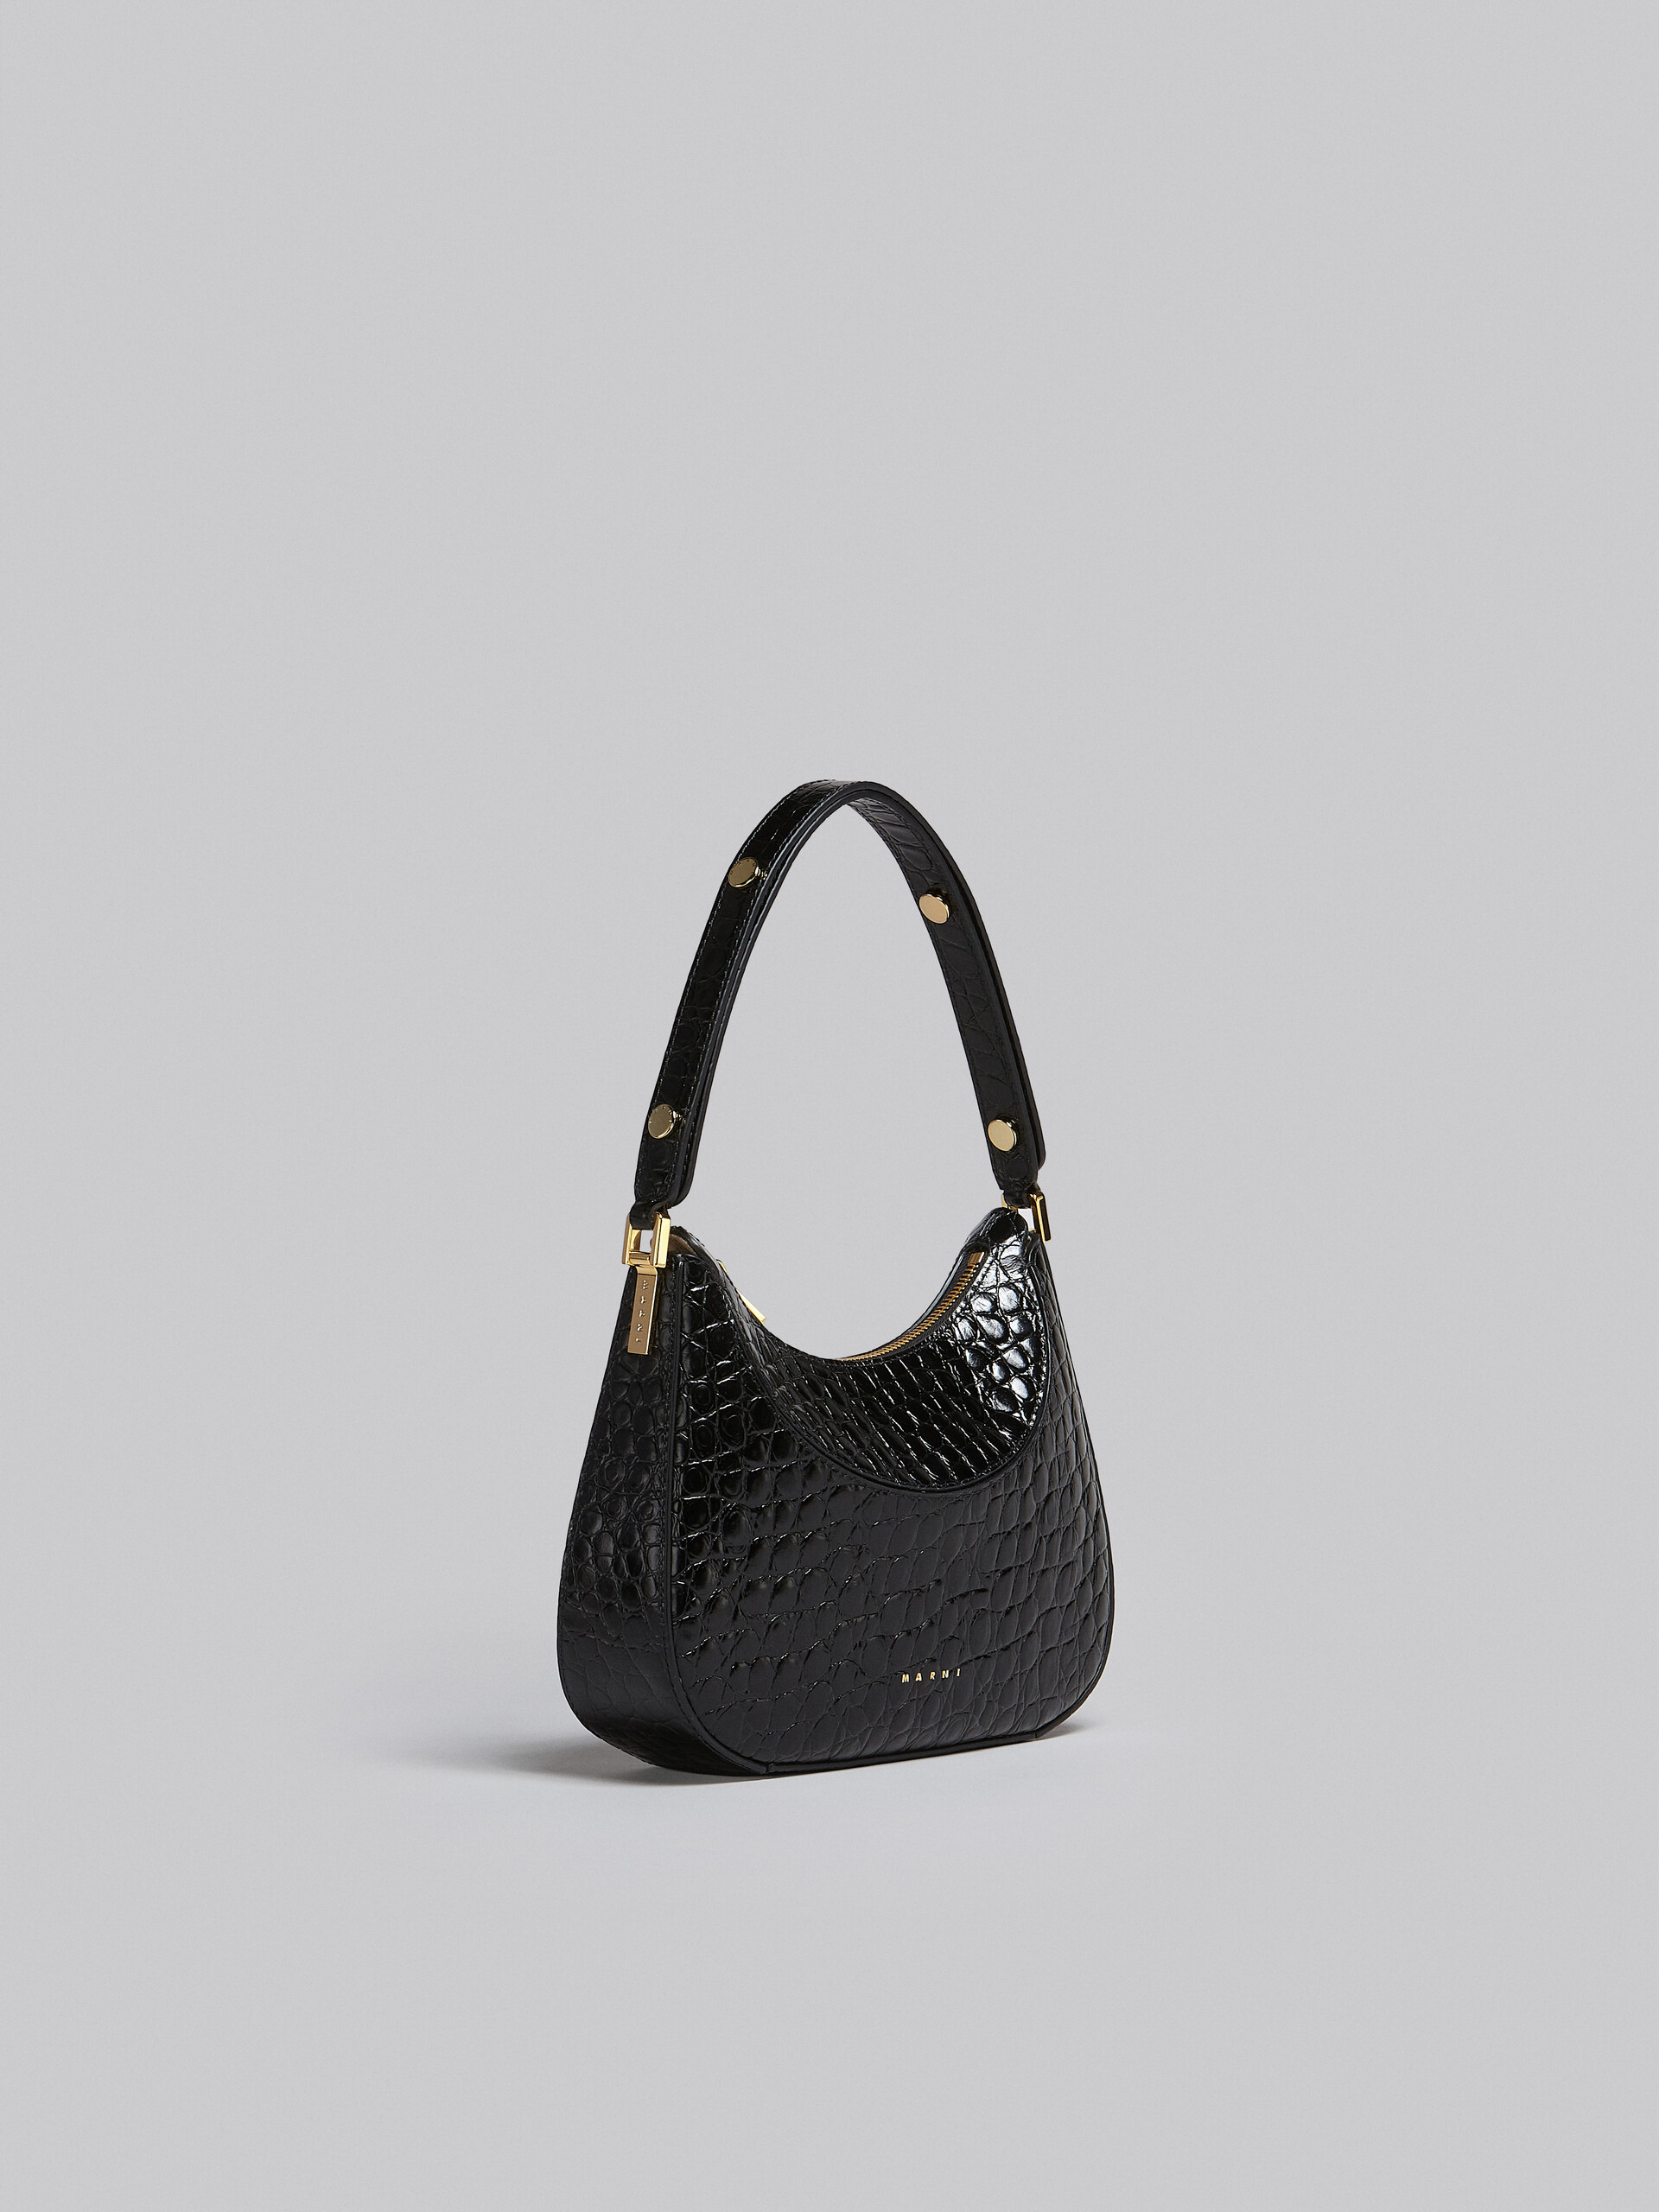 Milano Mini Bag in black croco print leather - Handbags - Image 5